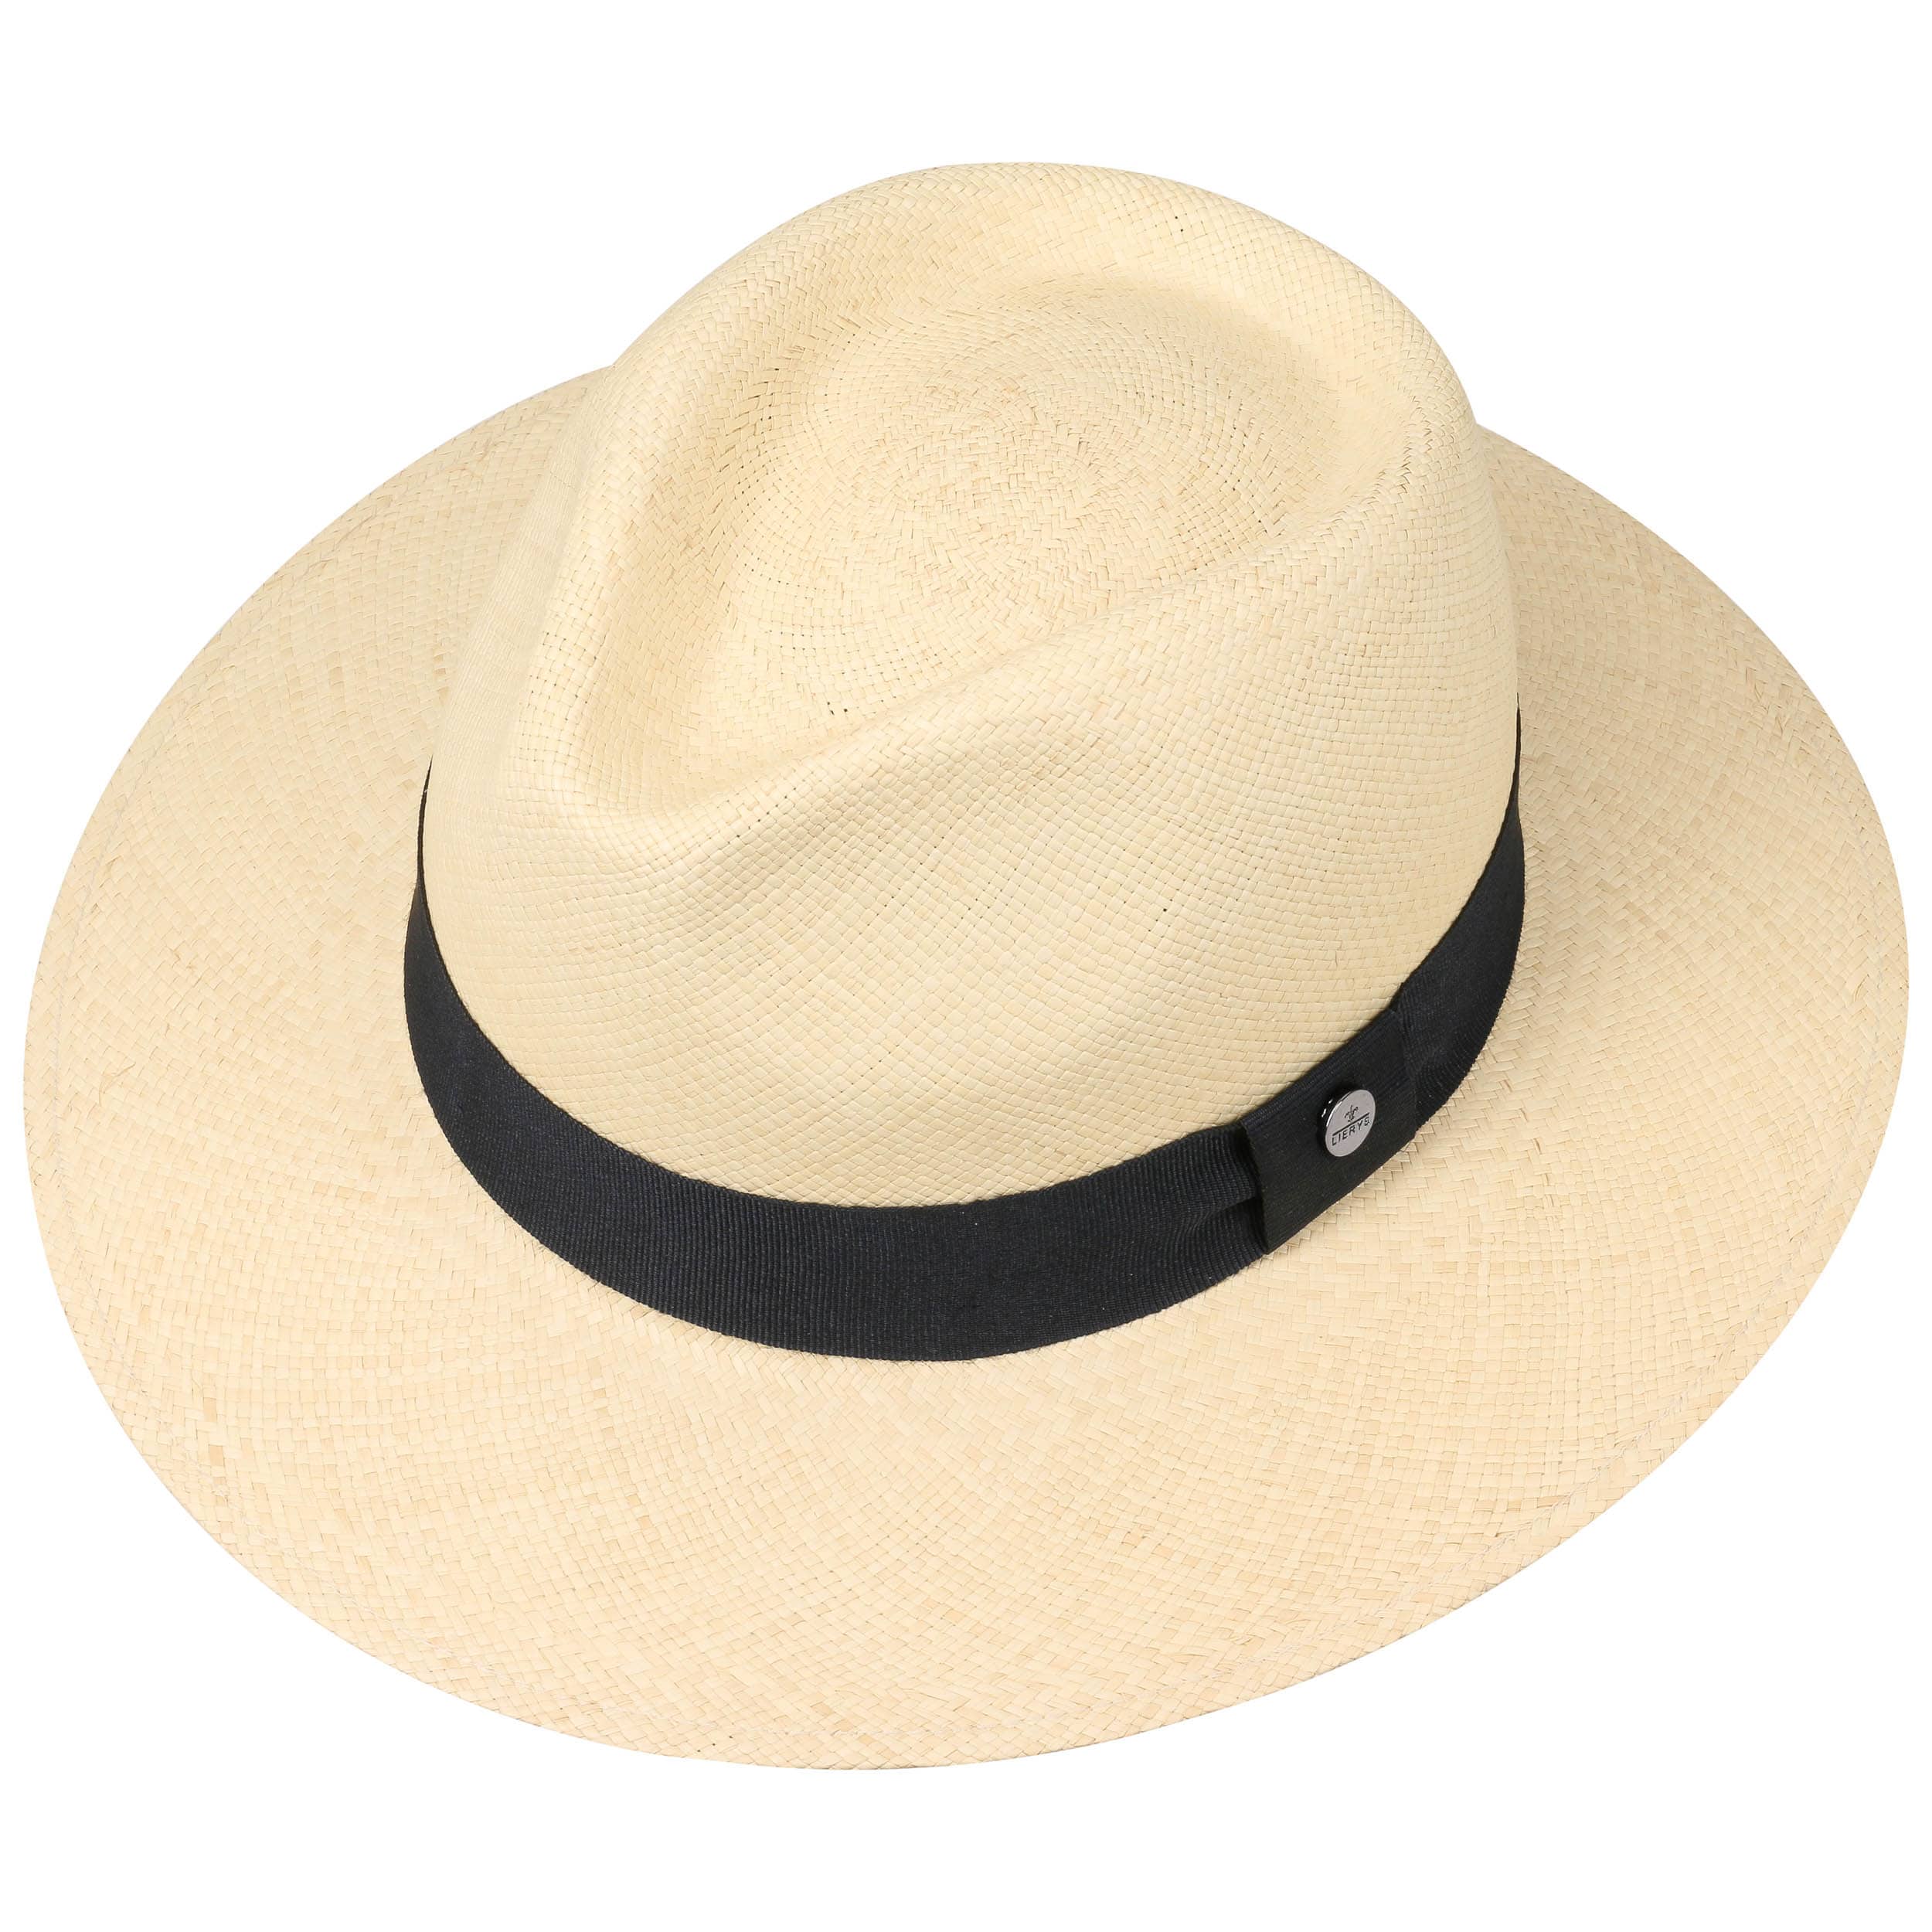 Sombrero de Hombre con Adorno de Piel Lierys Sombrero Panamá Traveller The Striking de Hombre by Sombrero 100% de Paja panamá Sombrero de Hombre S-XXL Fabricado a Mano en Ecuador